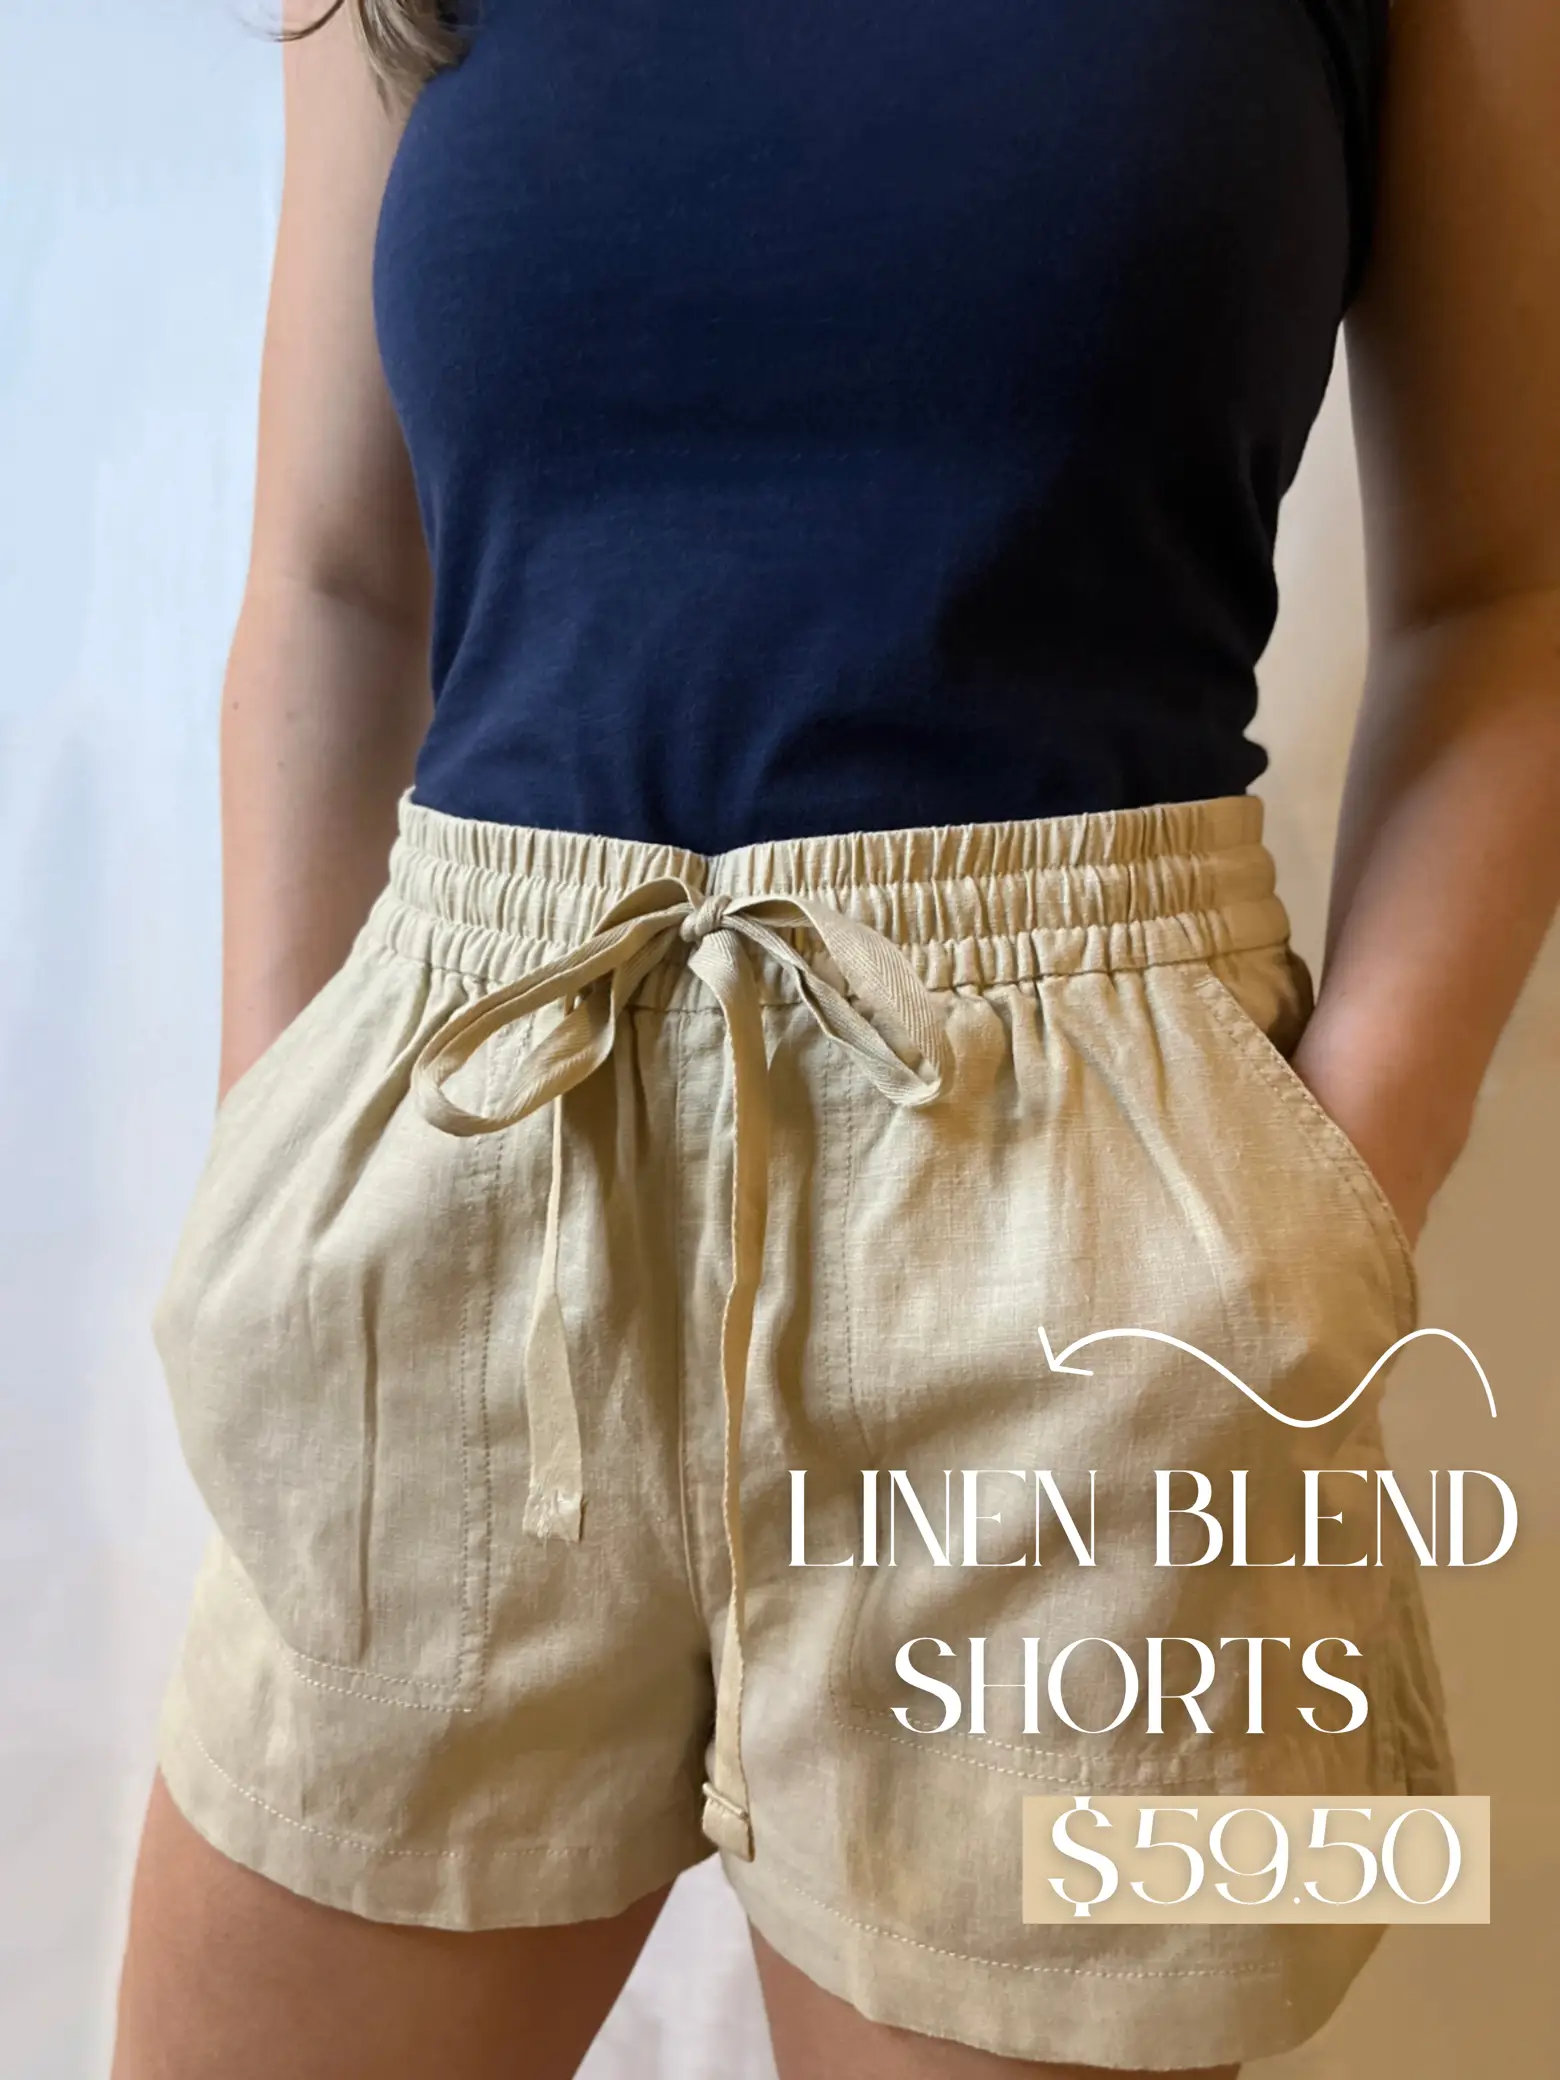 Azúcar Ladies Long Pants Elastic Waist Band With Belt. 100% Linen